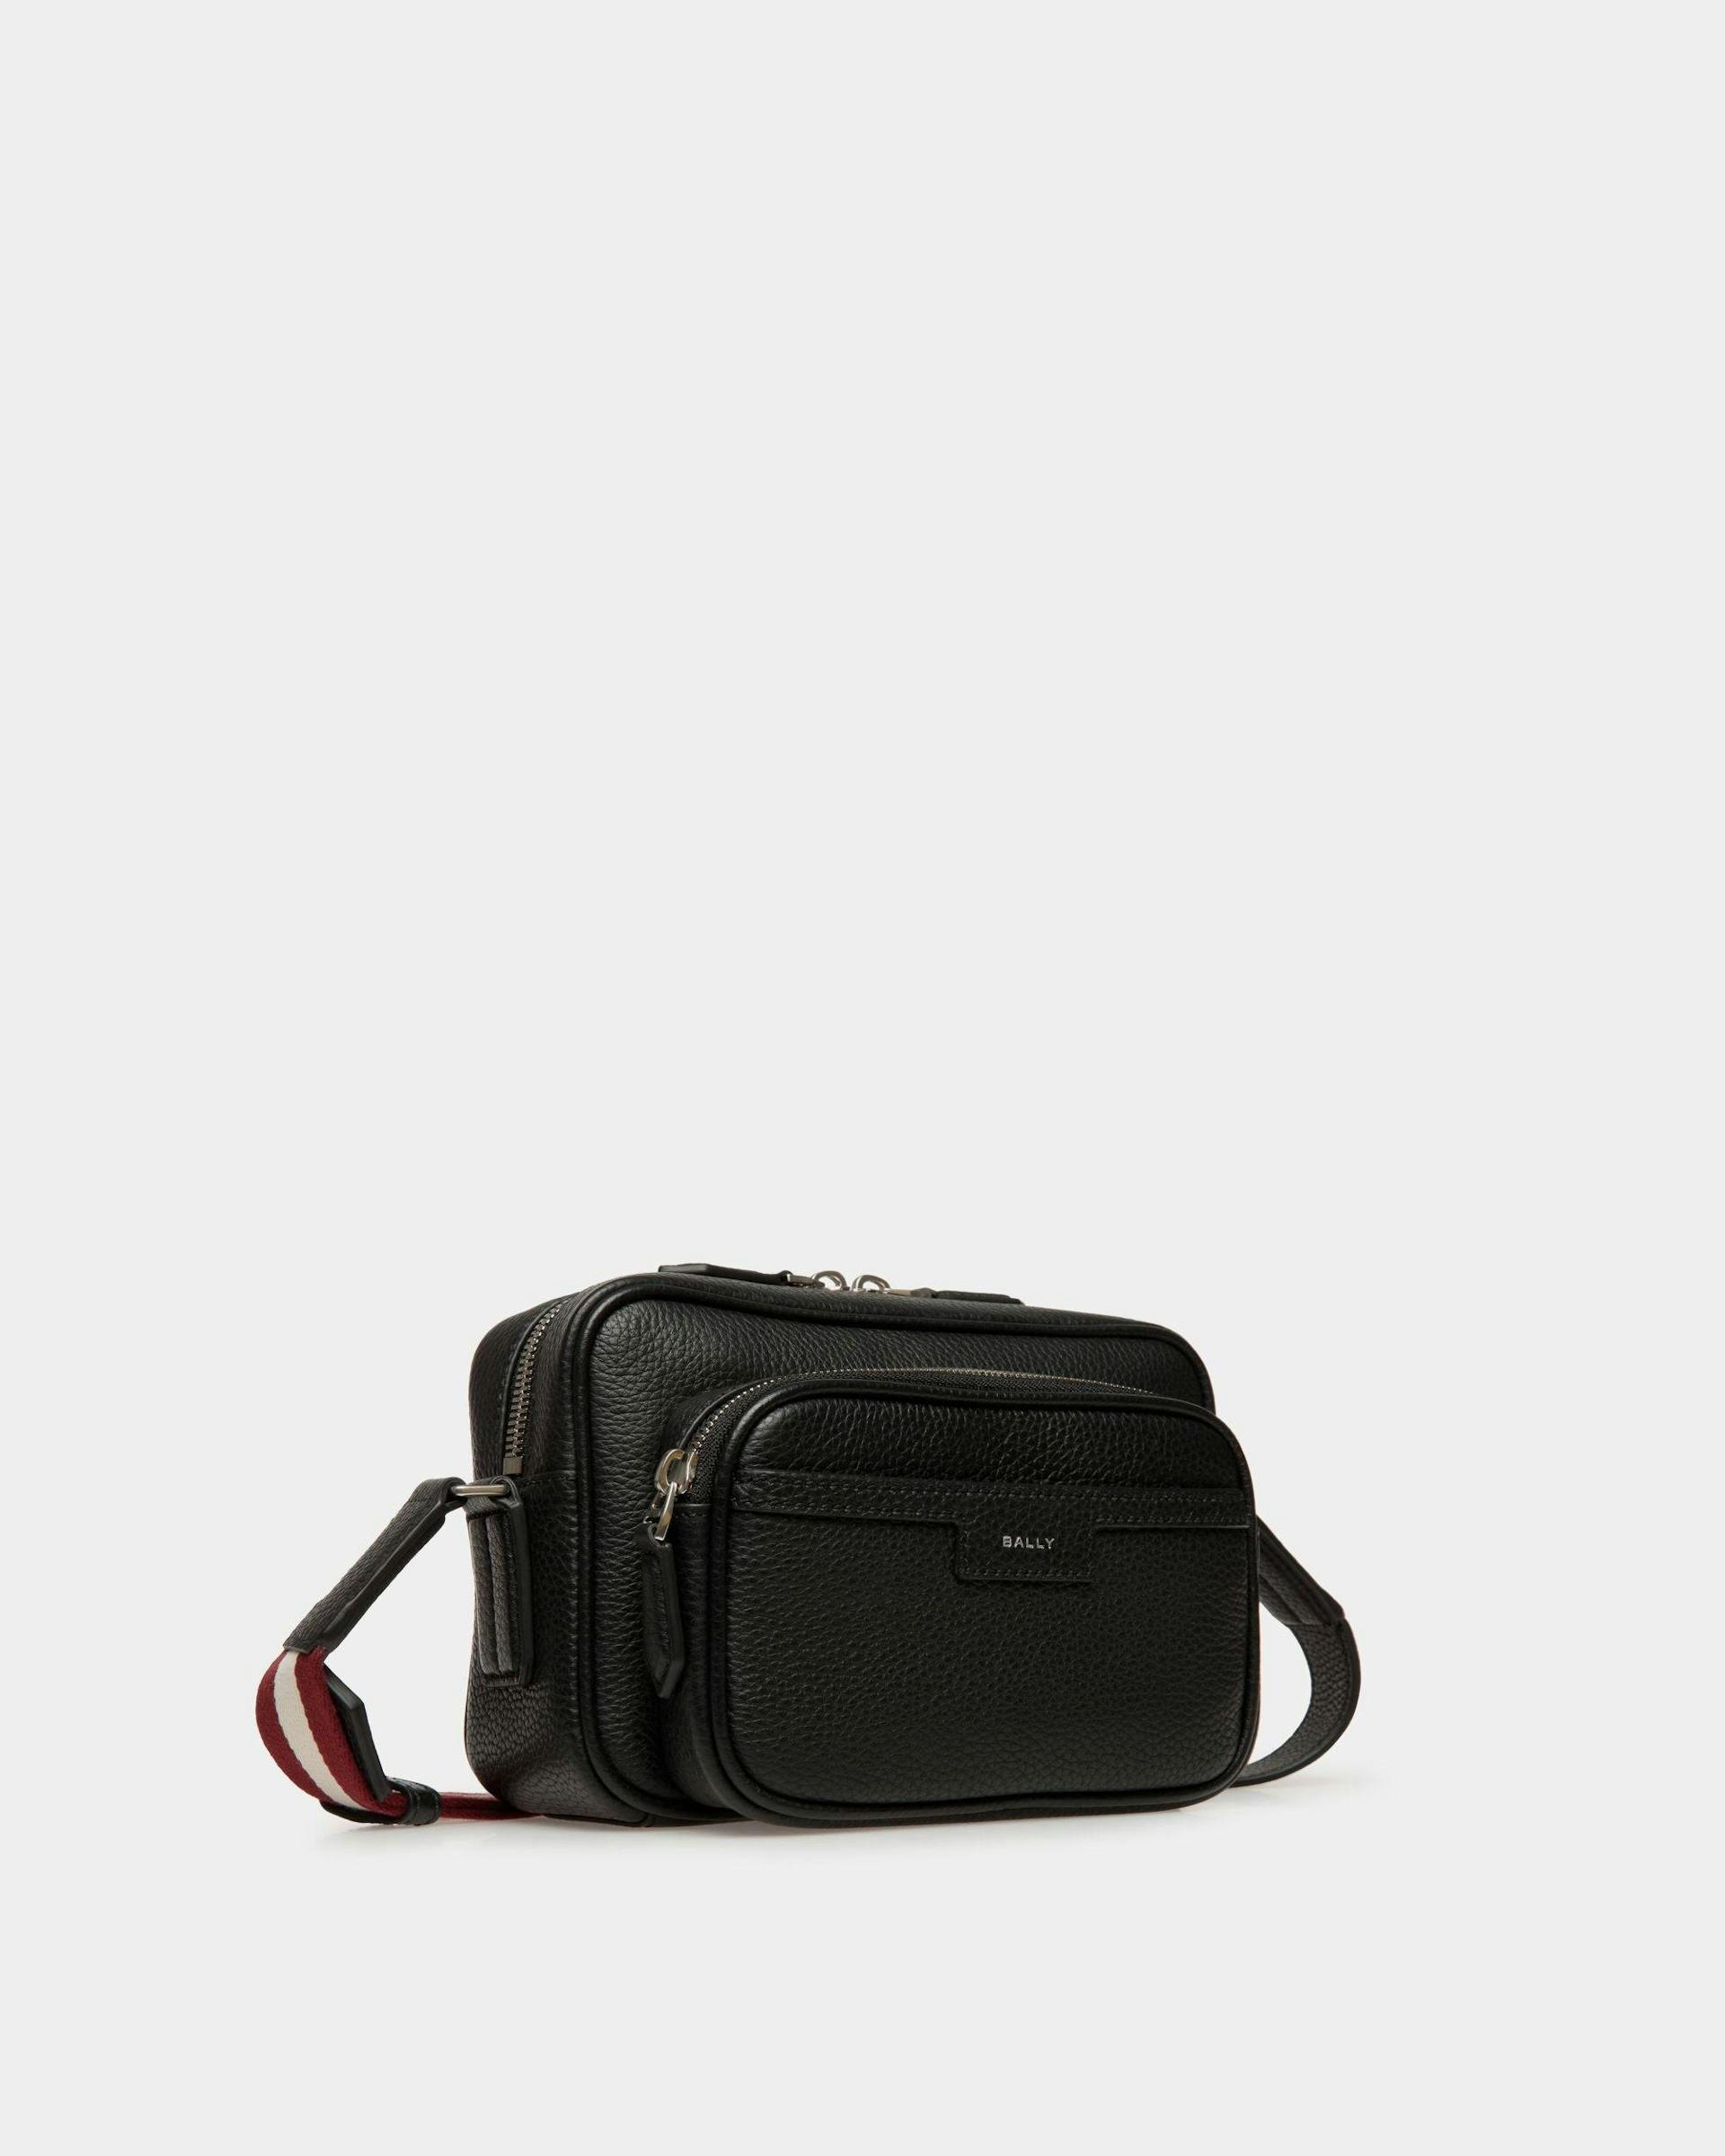 Men's Code Crossbody Bag in Black Grained Leather | Bally | Still Life 3/4 Front